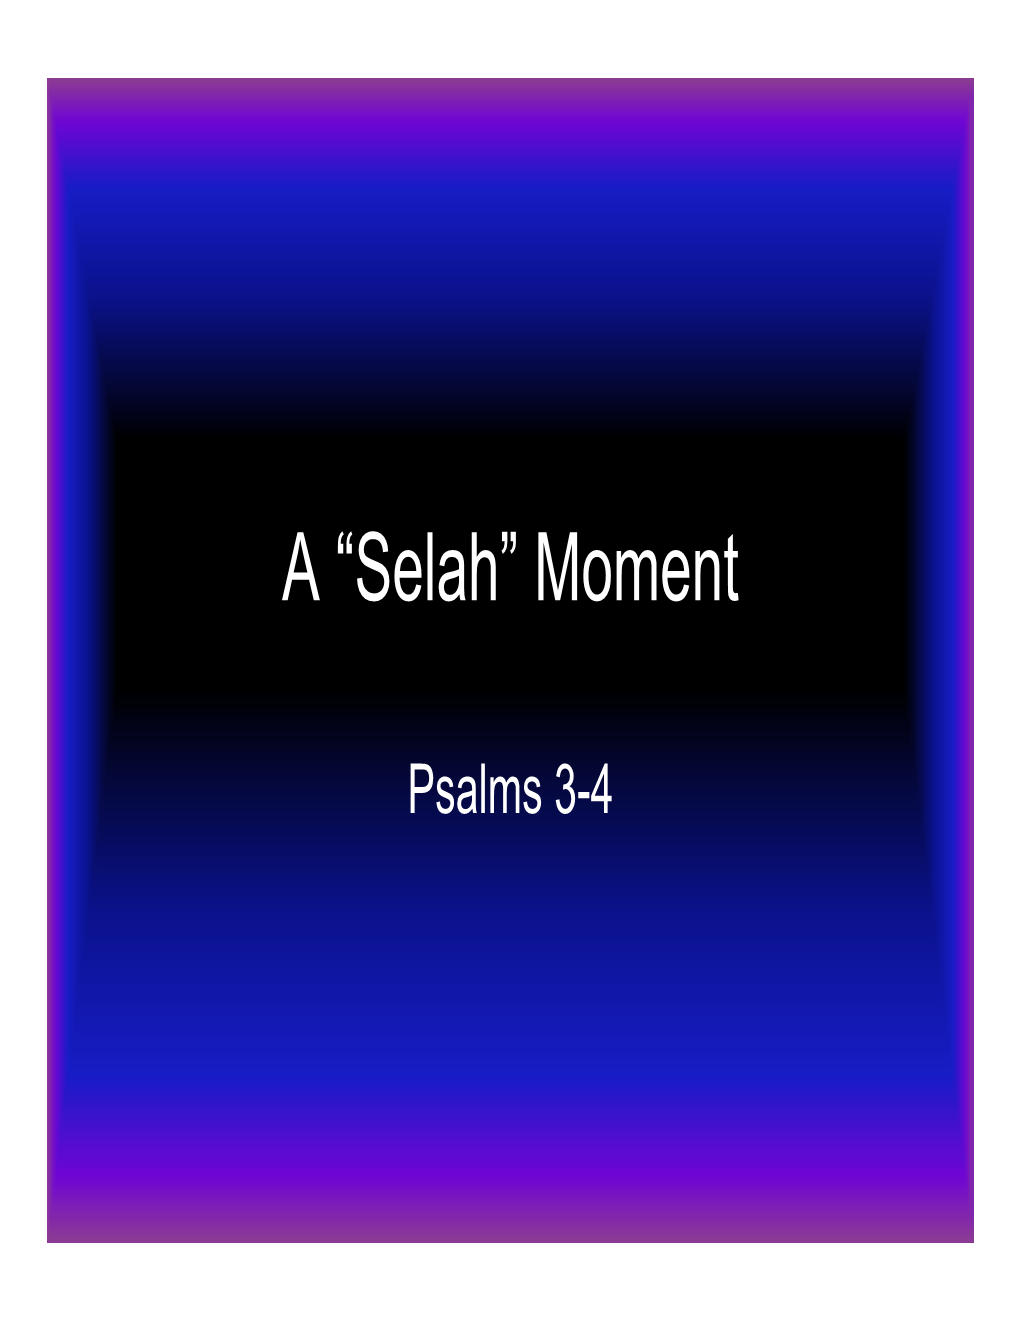 A “Selah” Moment